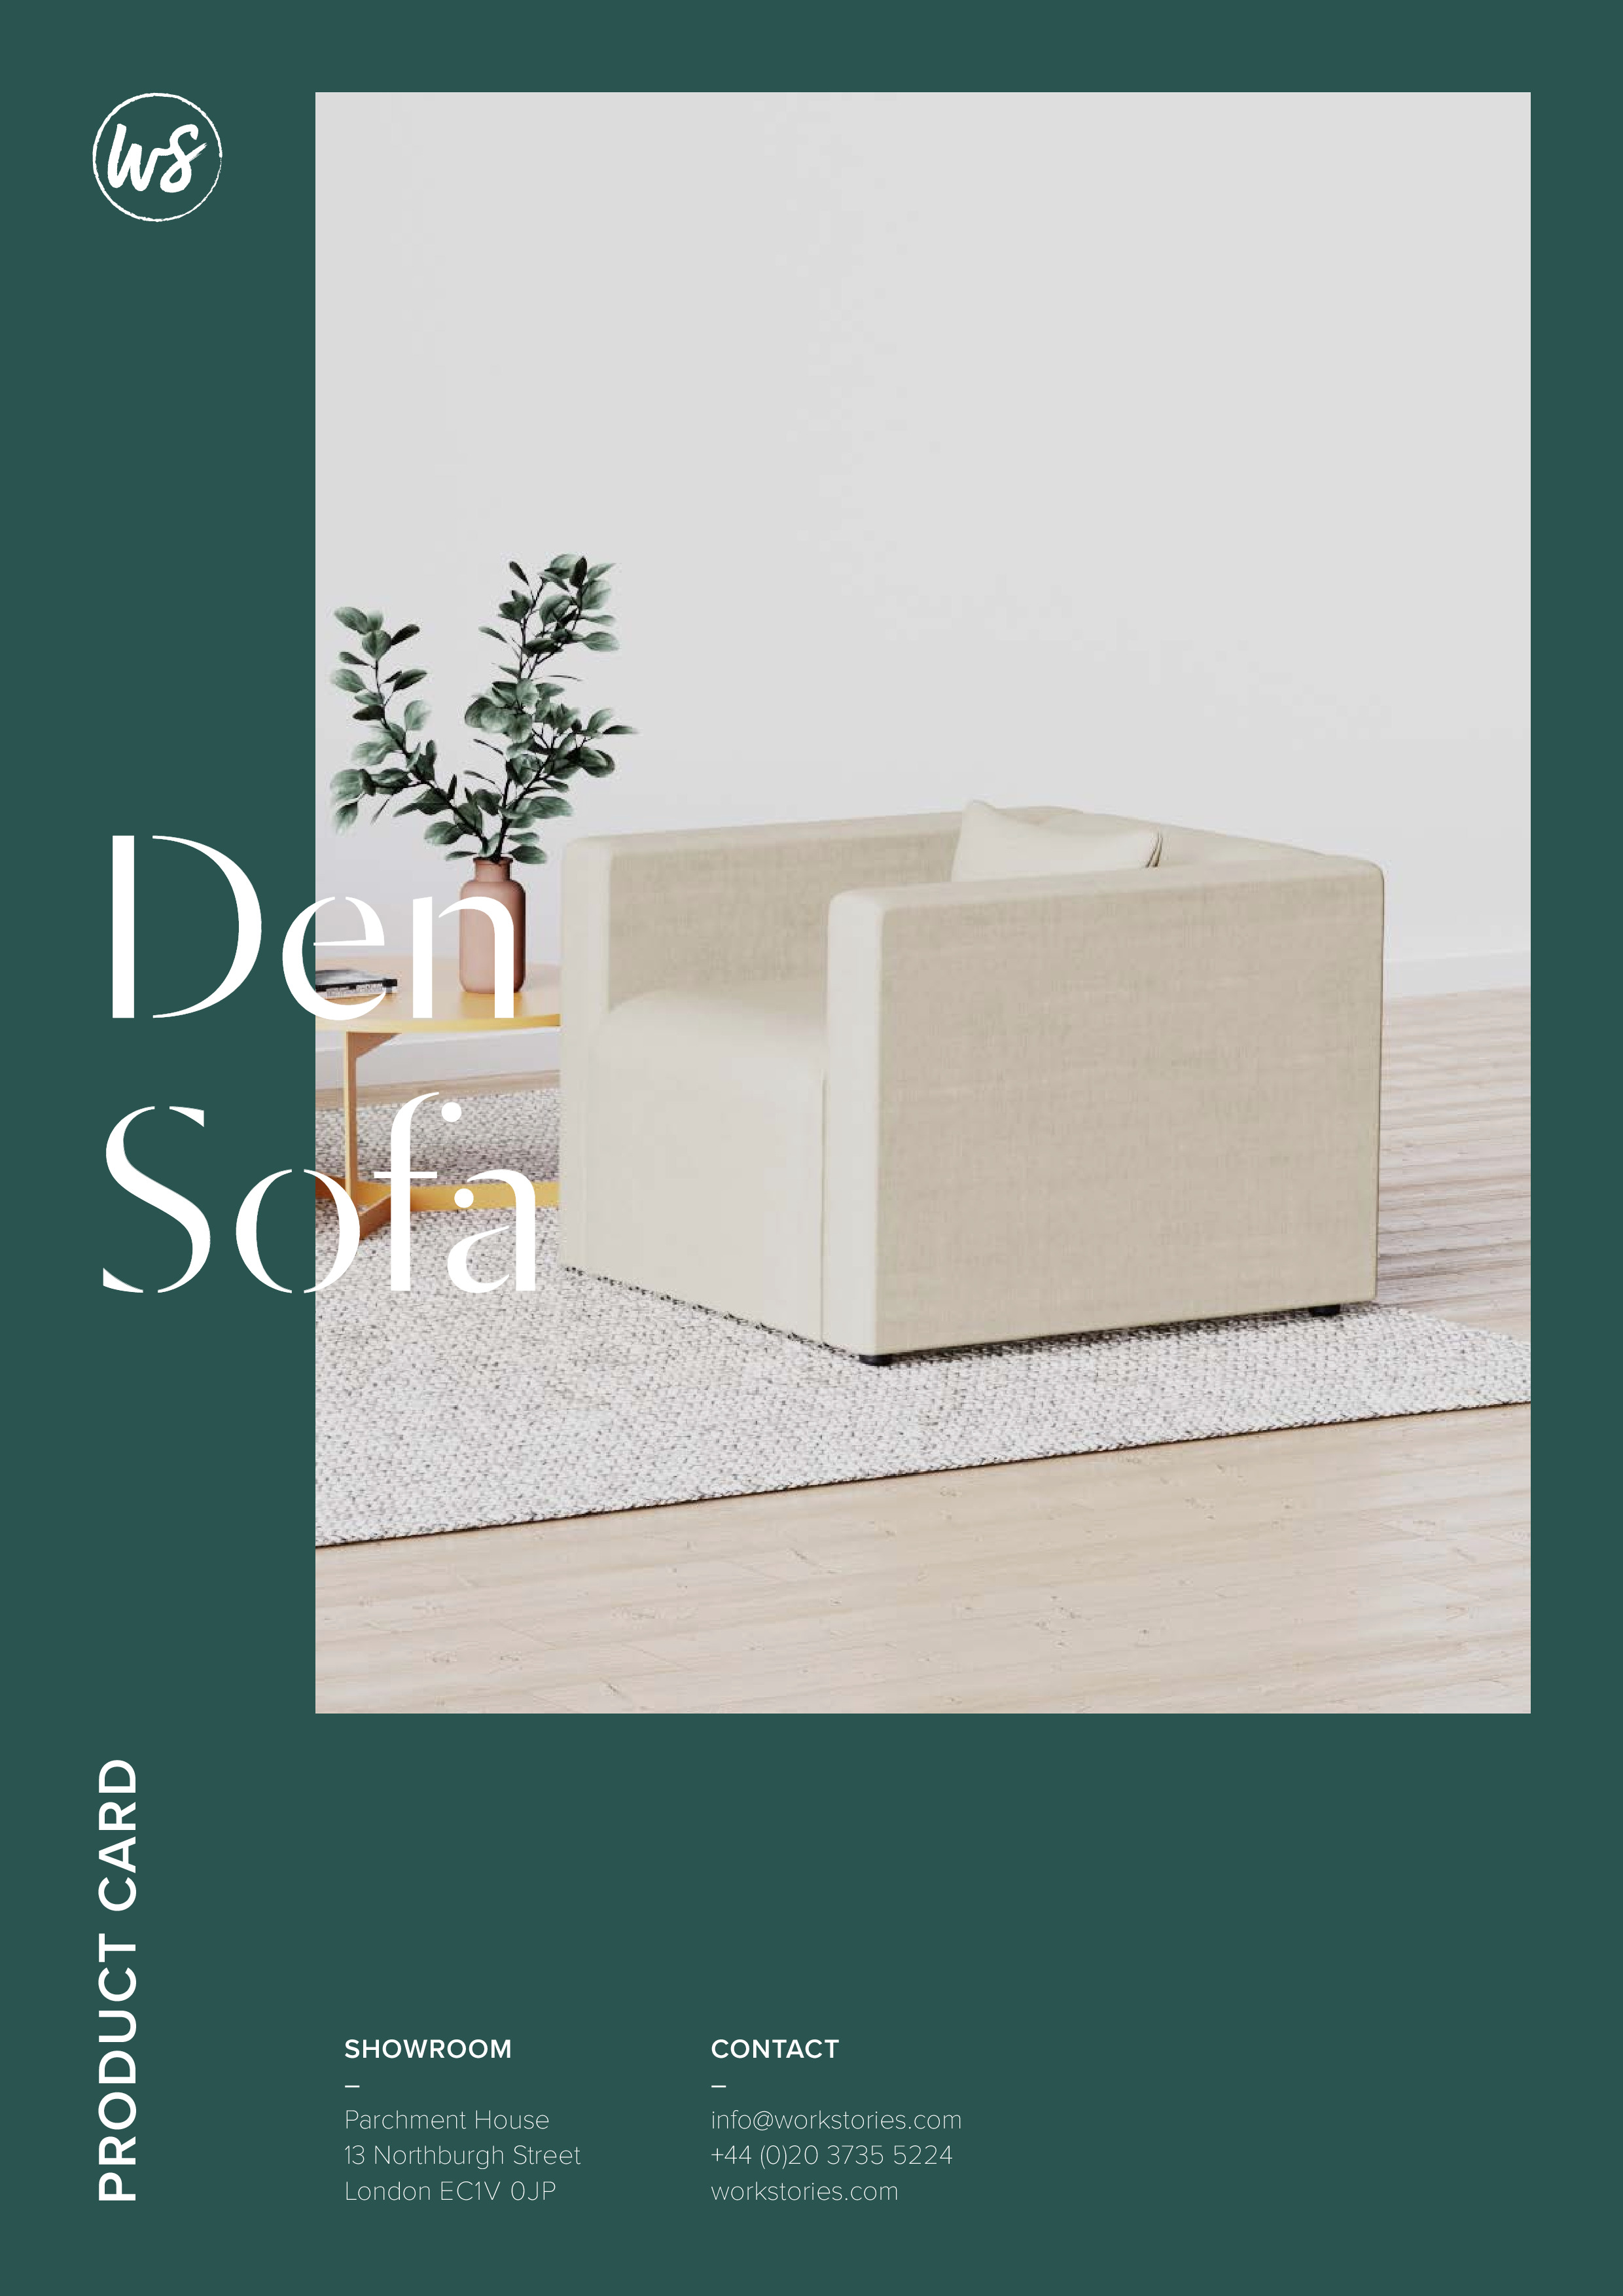 WS - Den Sofa - Product card